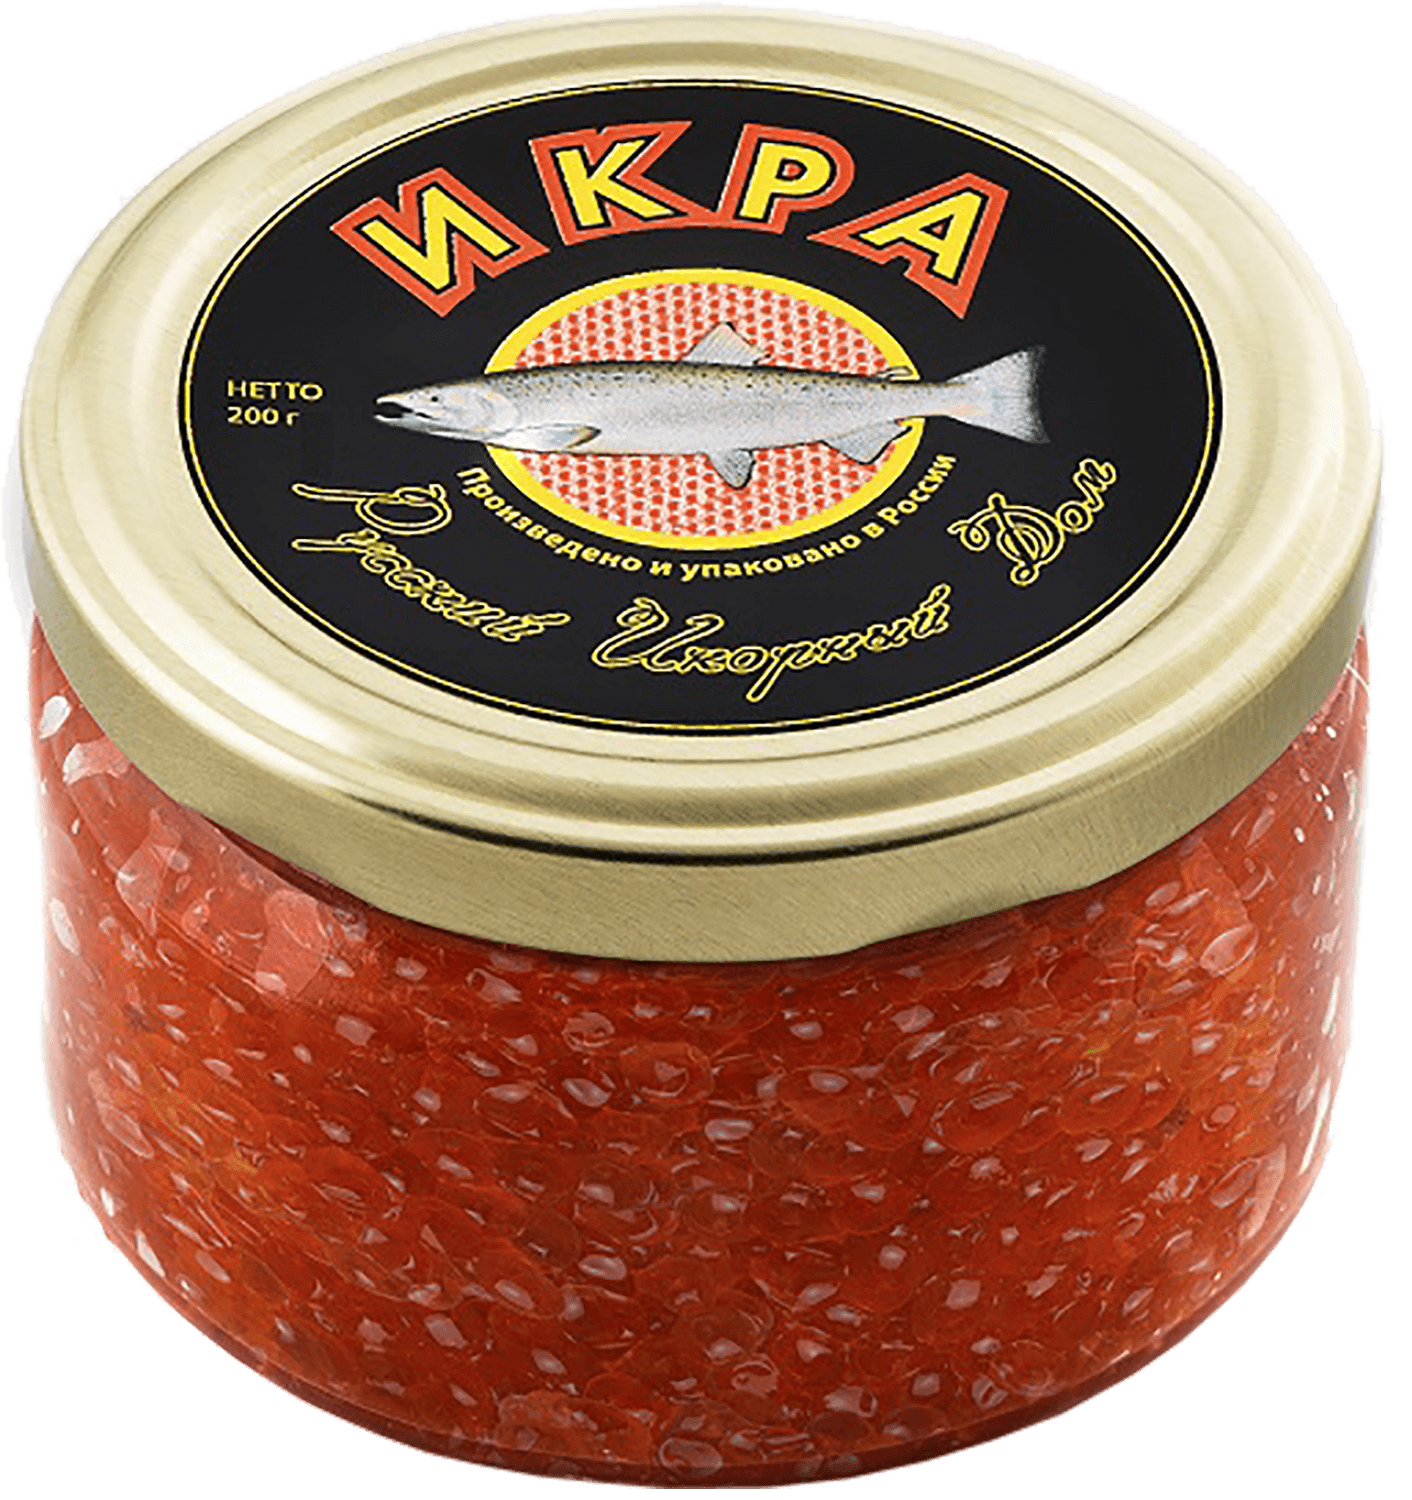 santa bremor salmon caviar and tin 140 g Pink salmon caviar twist-off 200 g